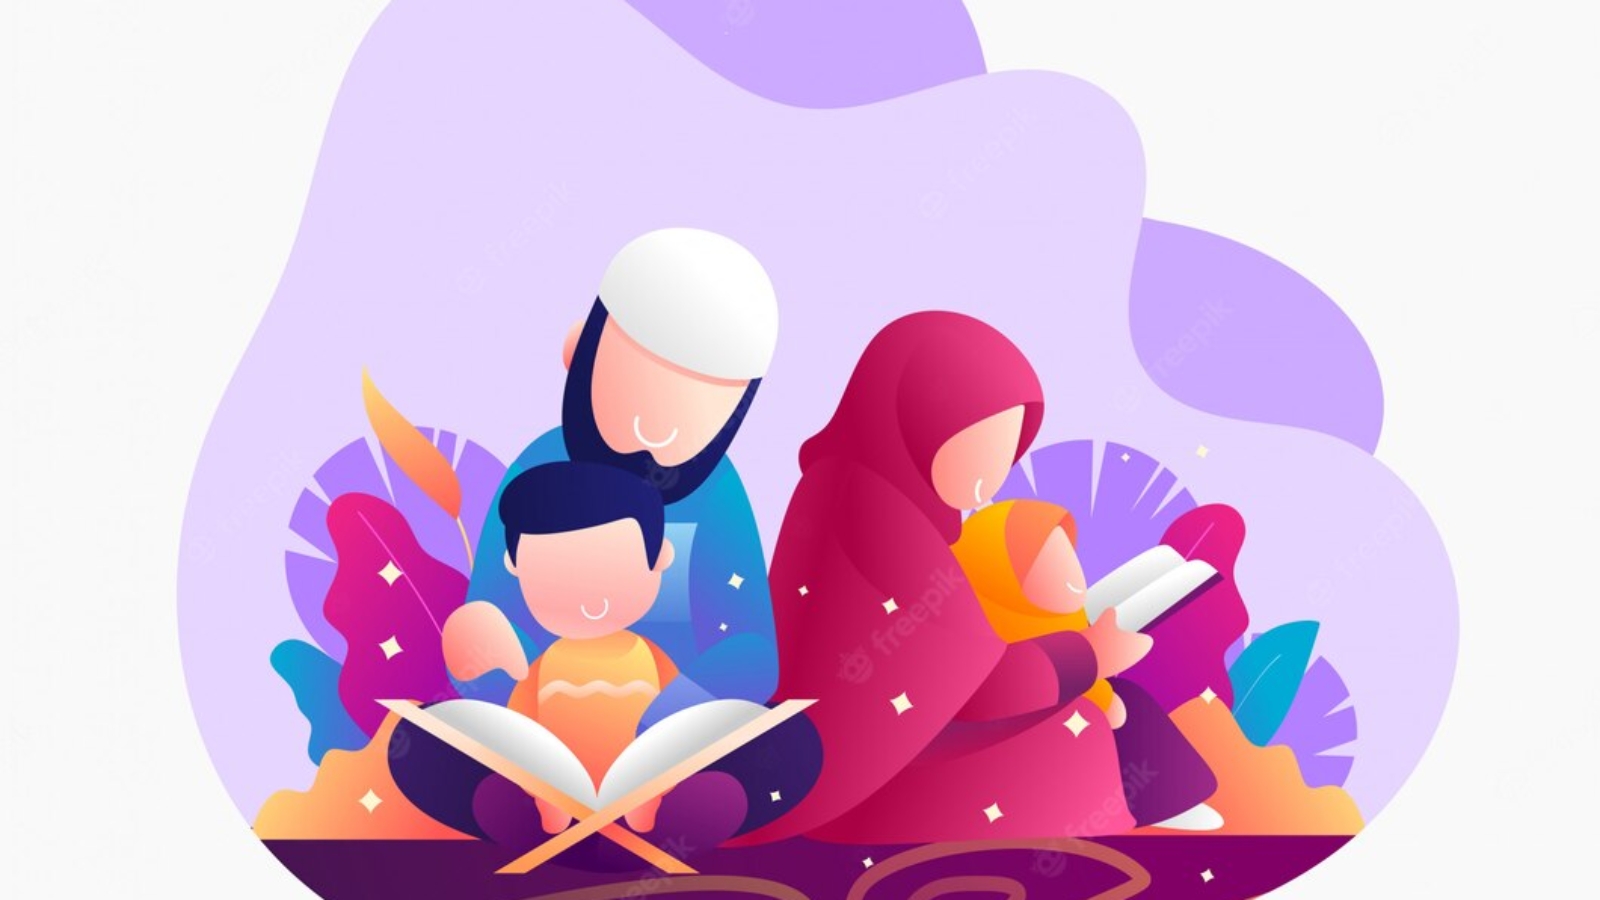 online quran classes for kids